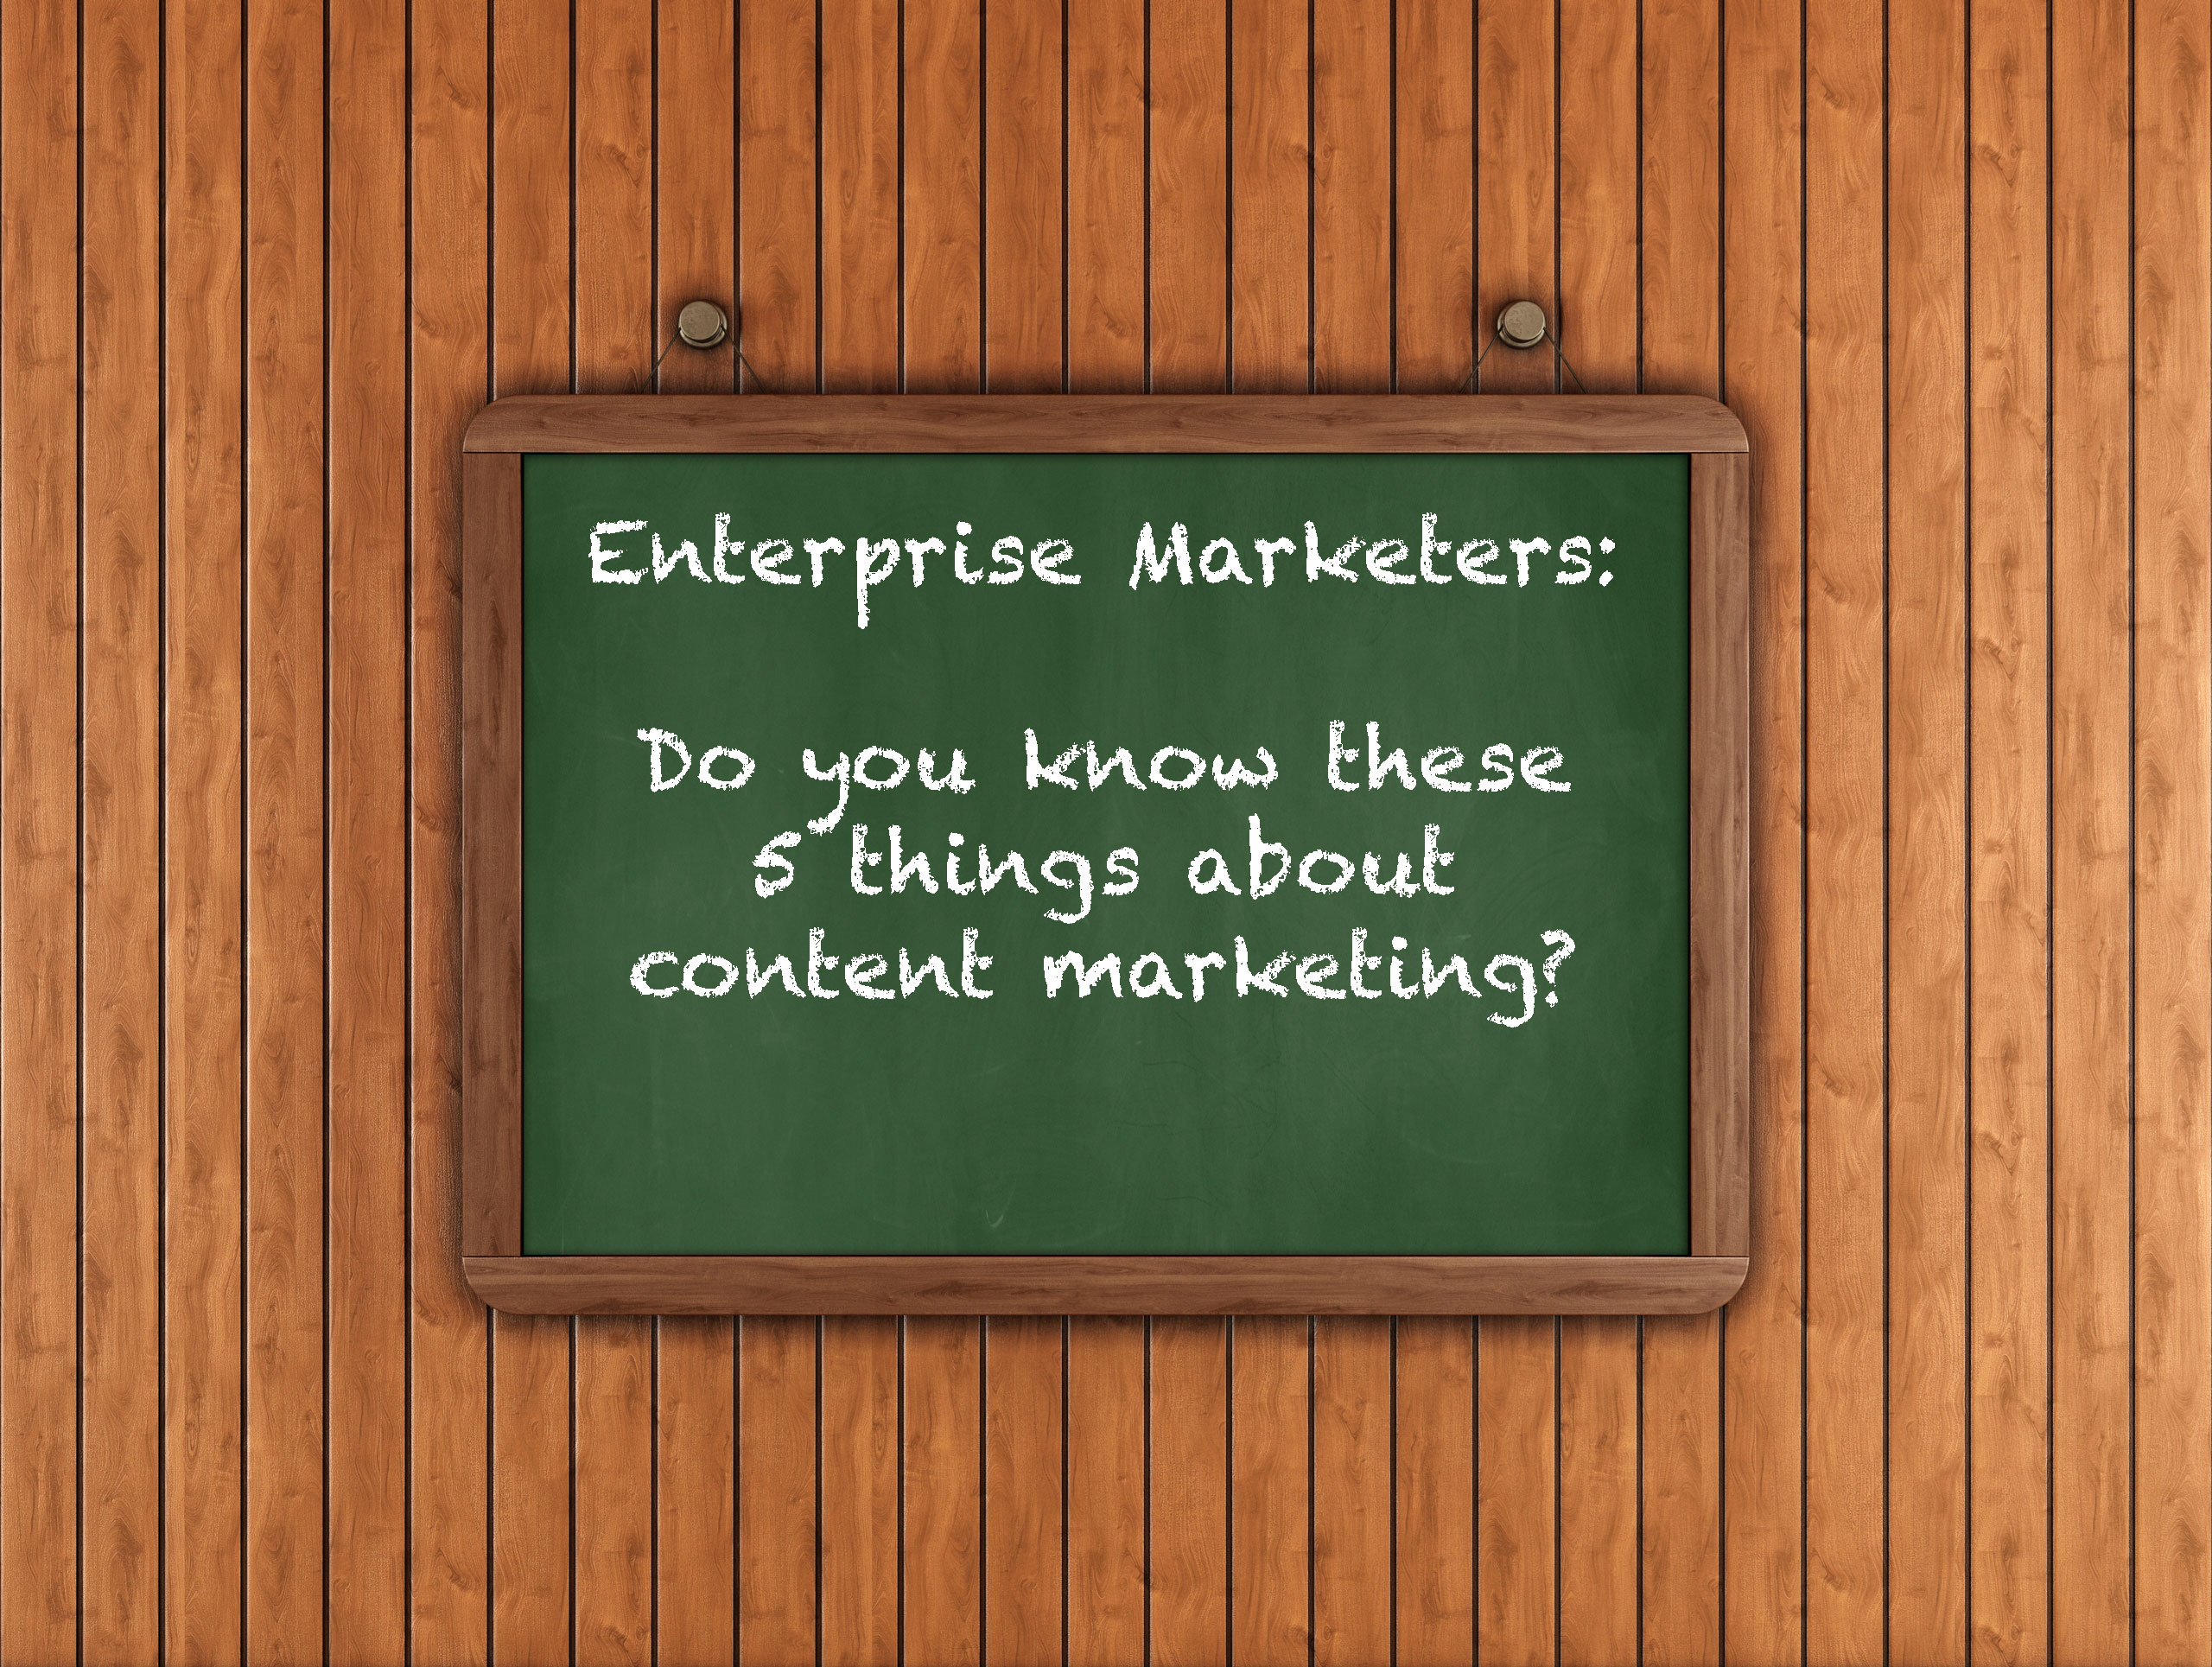 content marketing for enterprise marketers